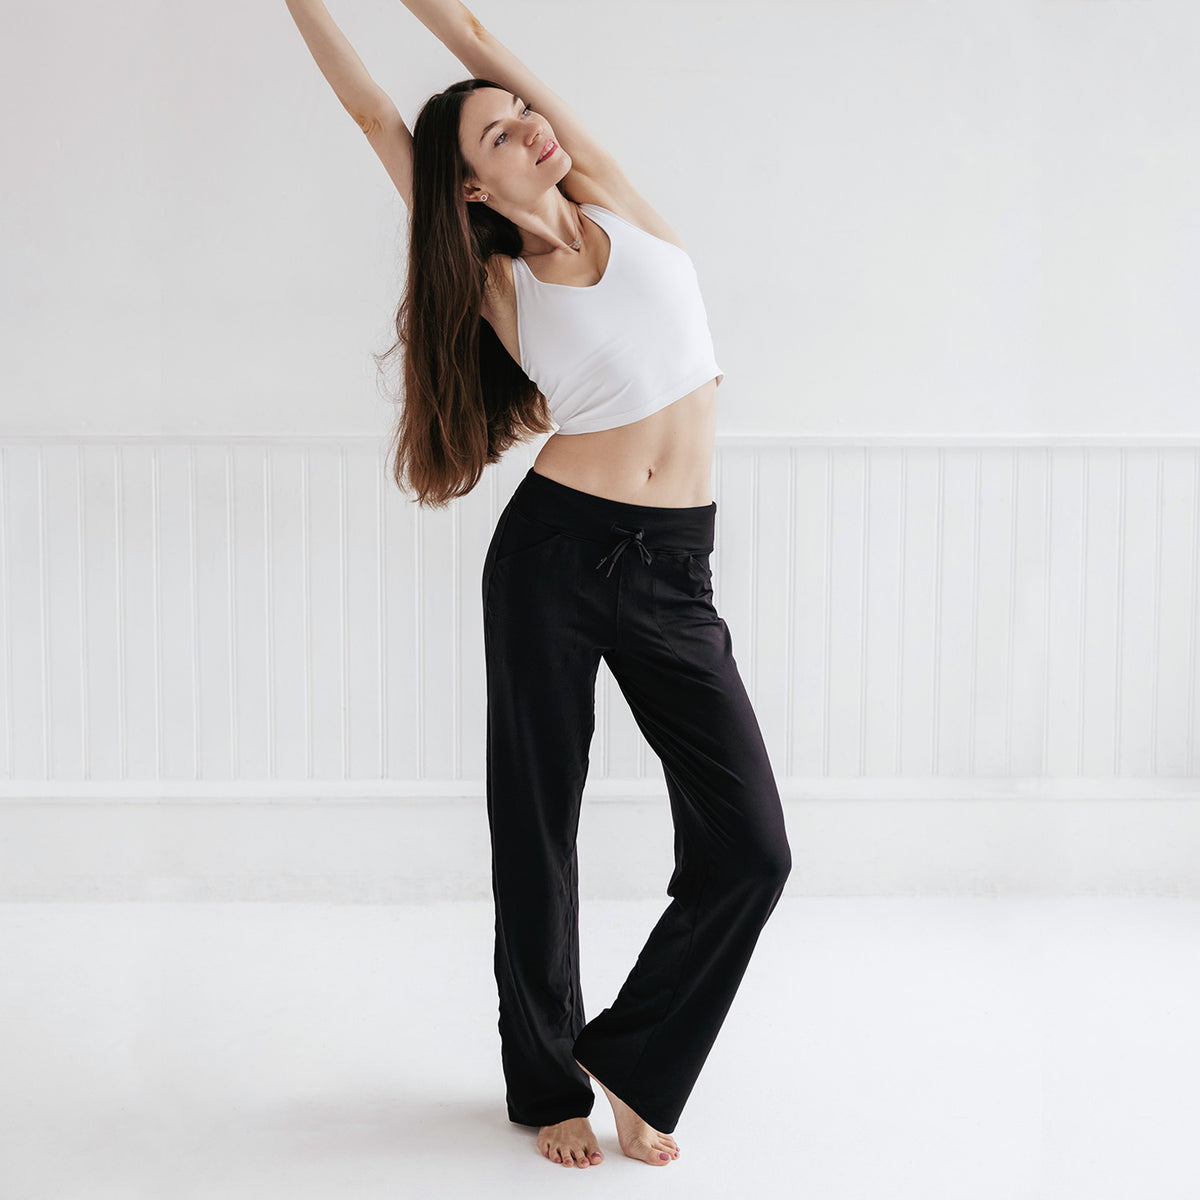 Yogipace,Petite Women's Bootcut Yoga Pants Long Workout Pant,27,Charcoal,Size  XXL price in UAE,  UAE